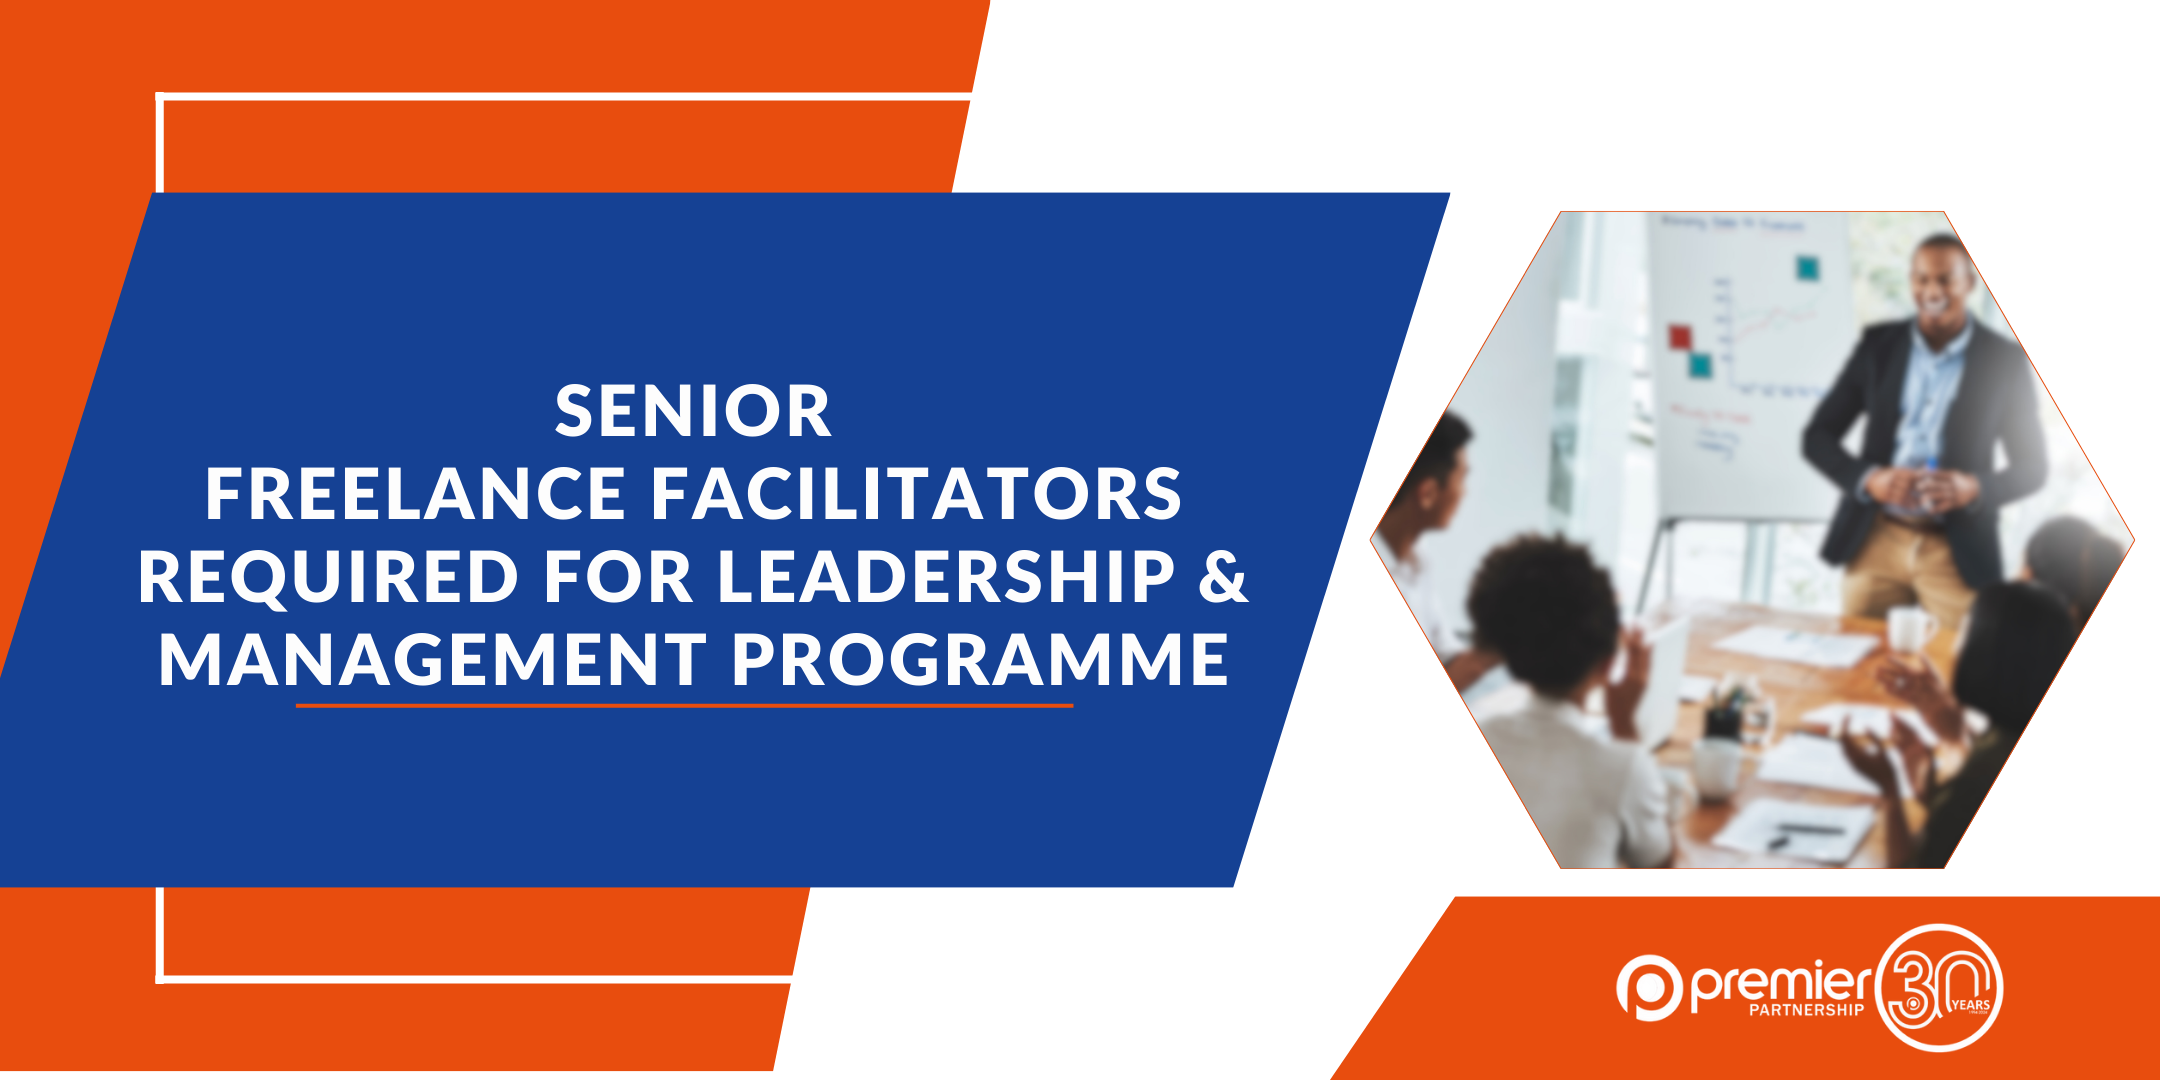 Senior Freelance Facilitators Required for Leadership & Management Programmes